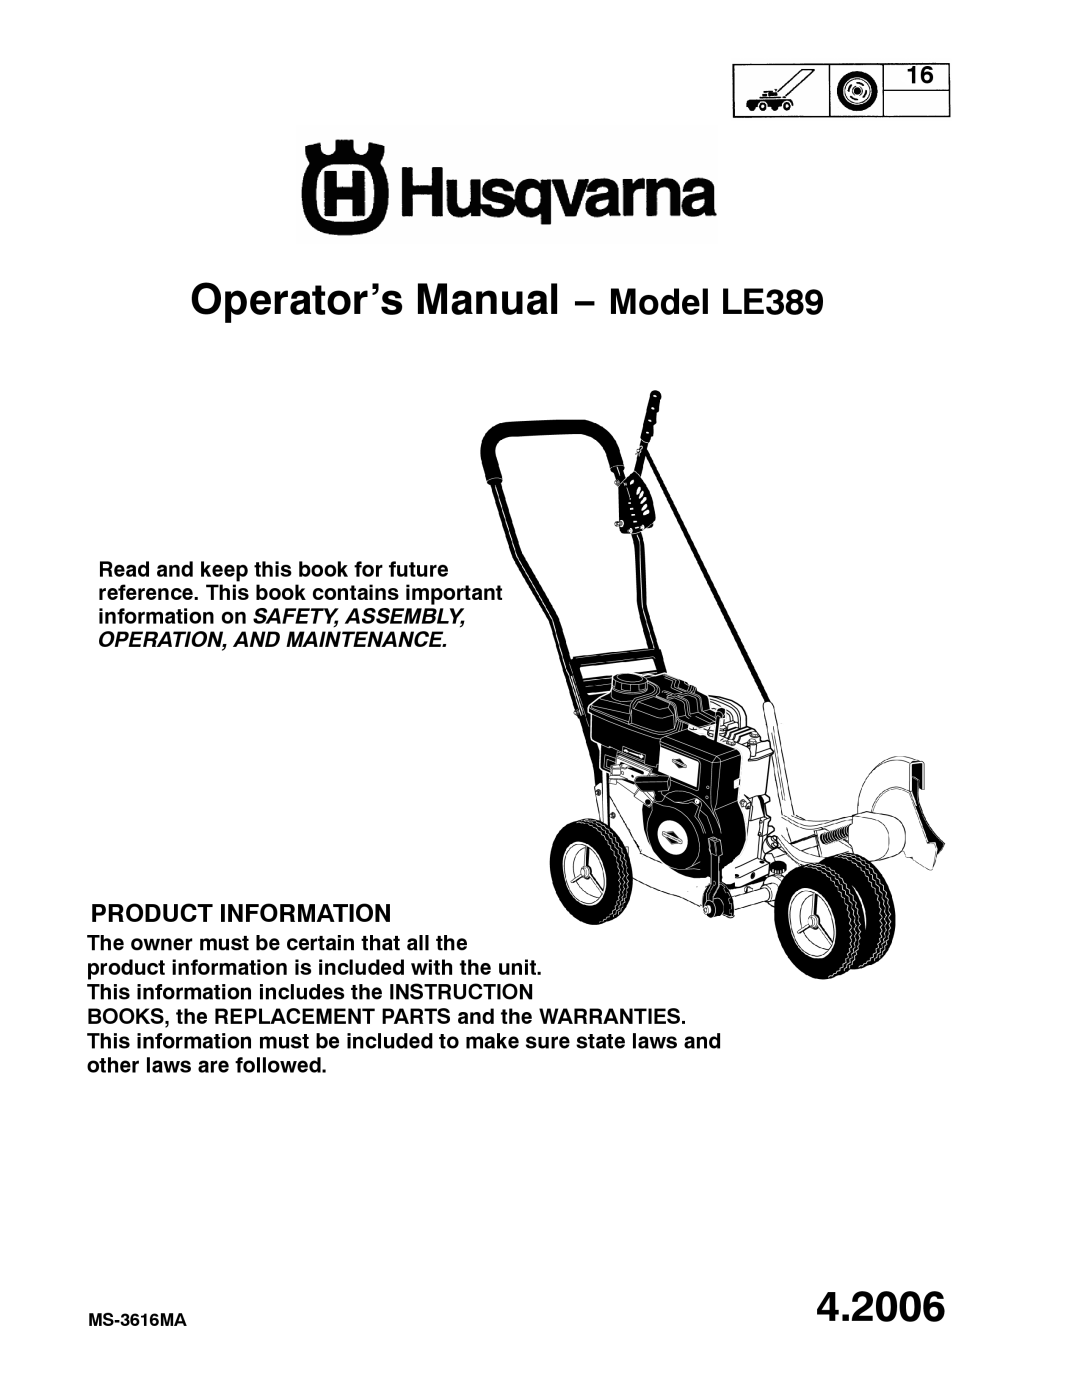 Husqvarna manual Product Information, Operator’s Manual − Model LE389, 4.2006 